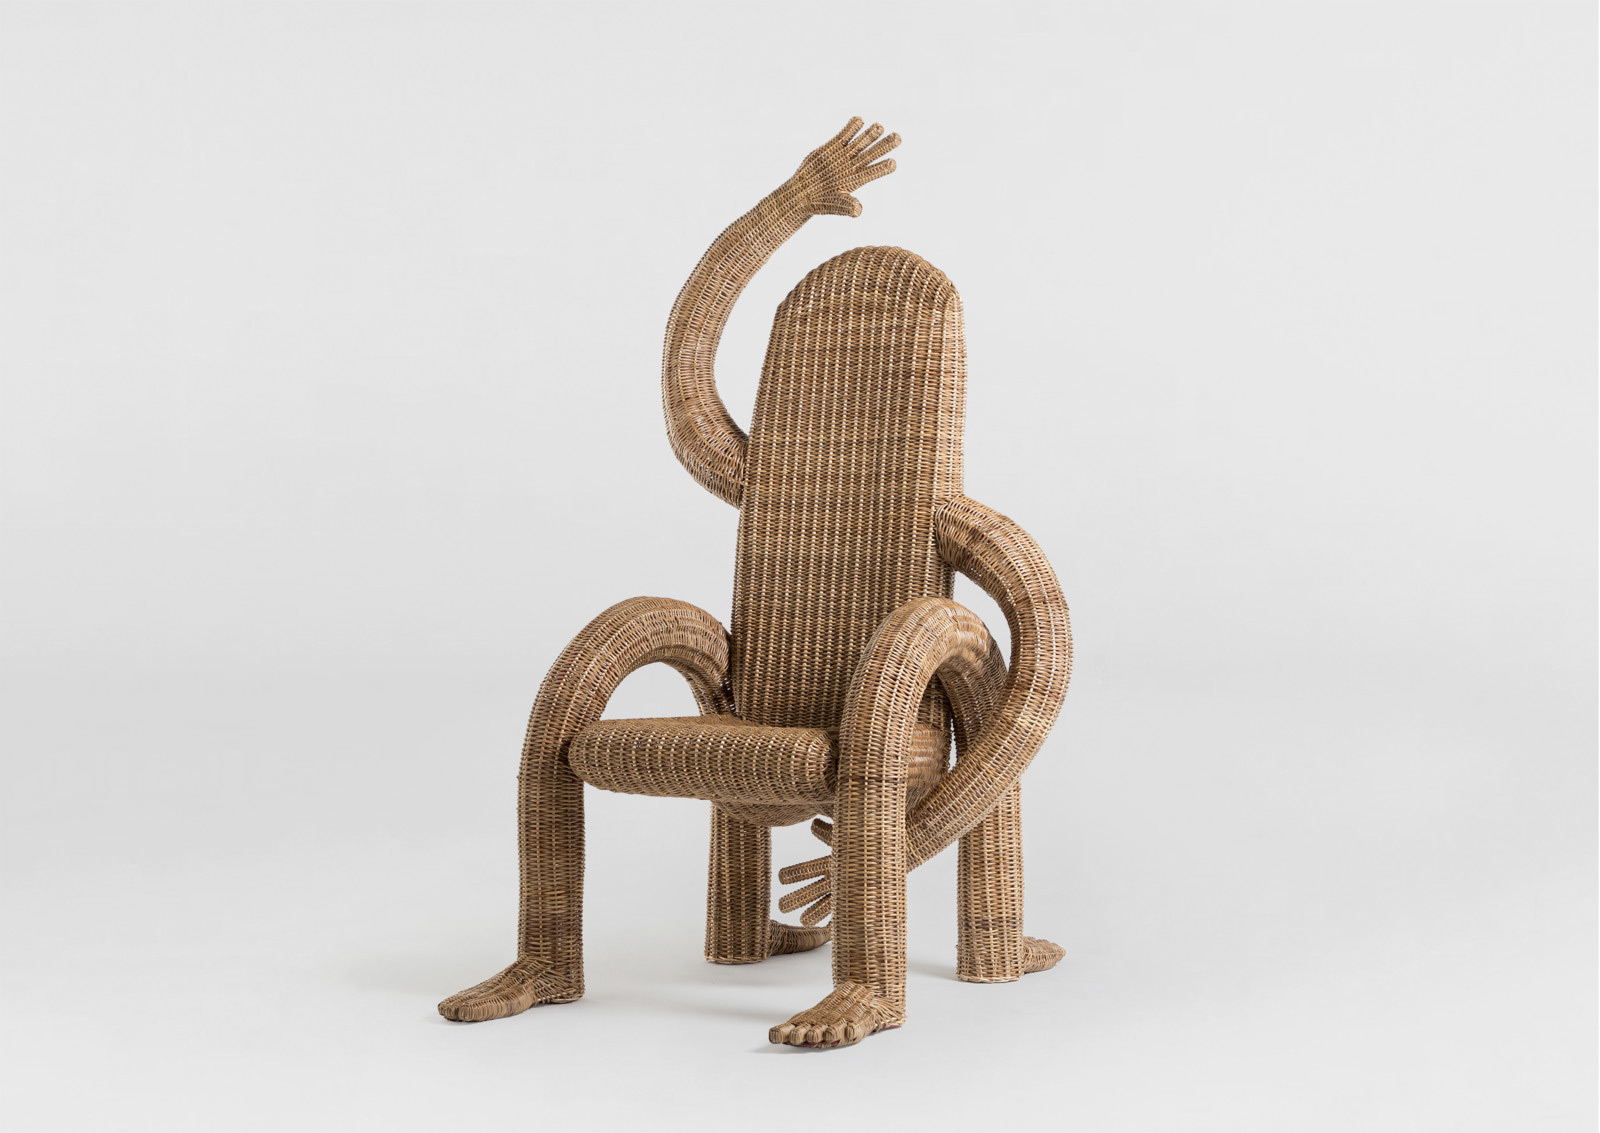 Nalgona Chair